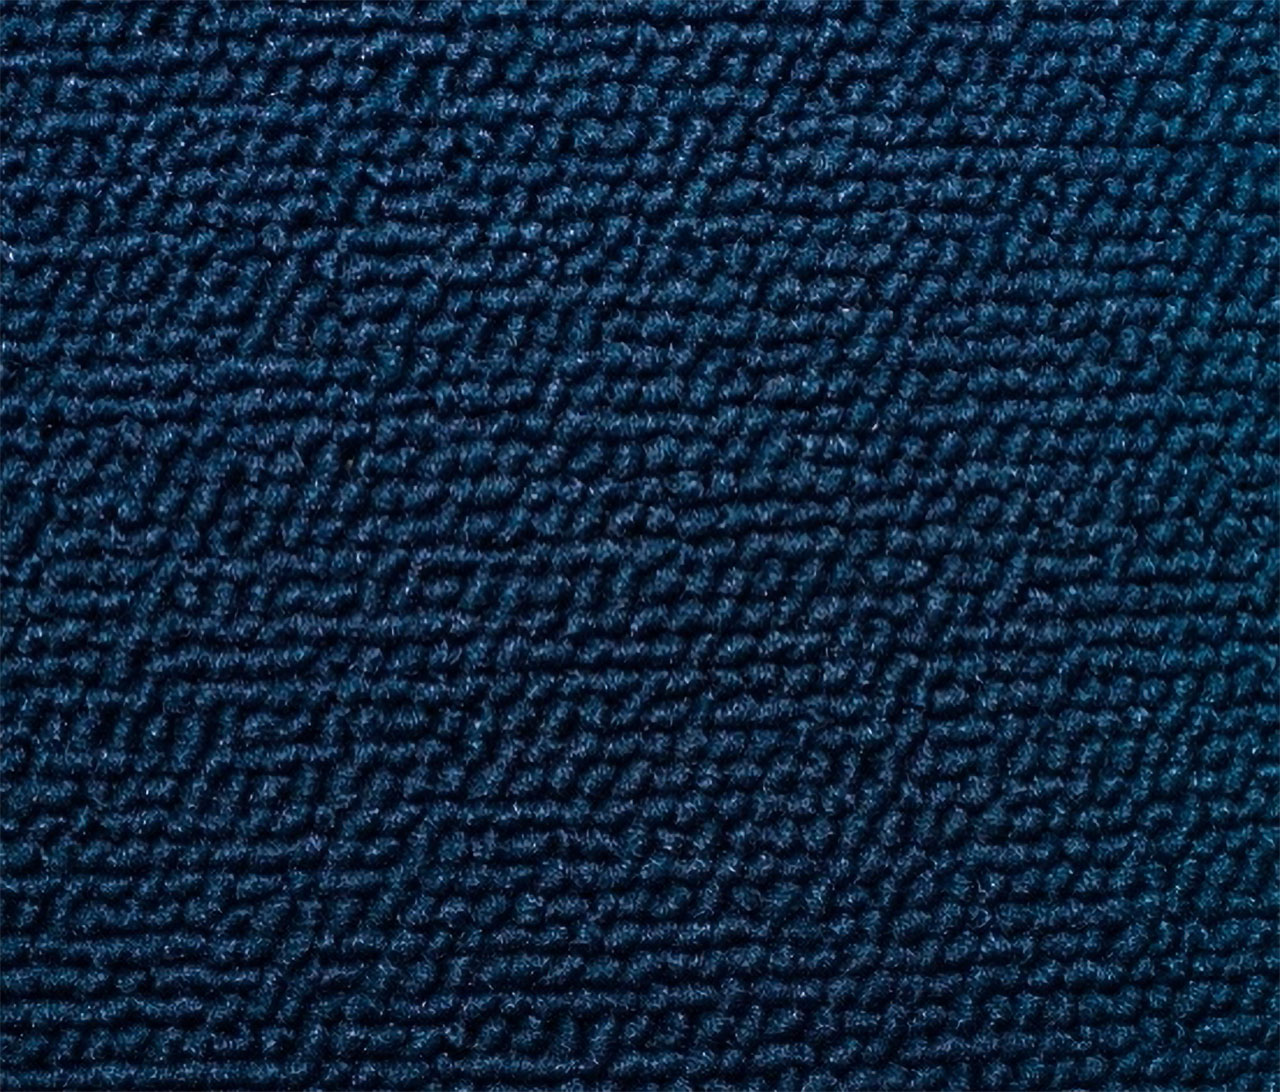 Holden Special HD Special Wagon D61 Contessa & Sceptre Blue Carpet (Image 1 of 1)